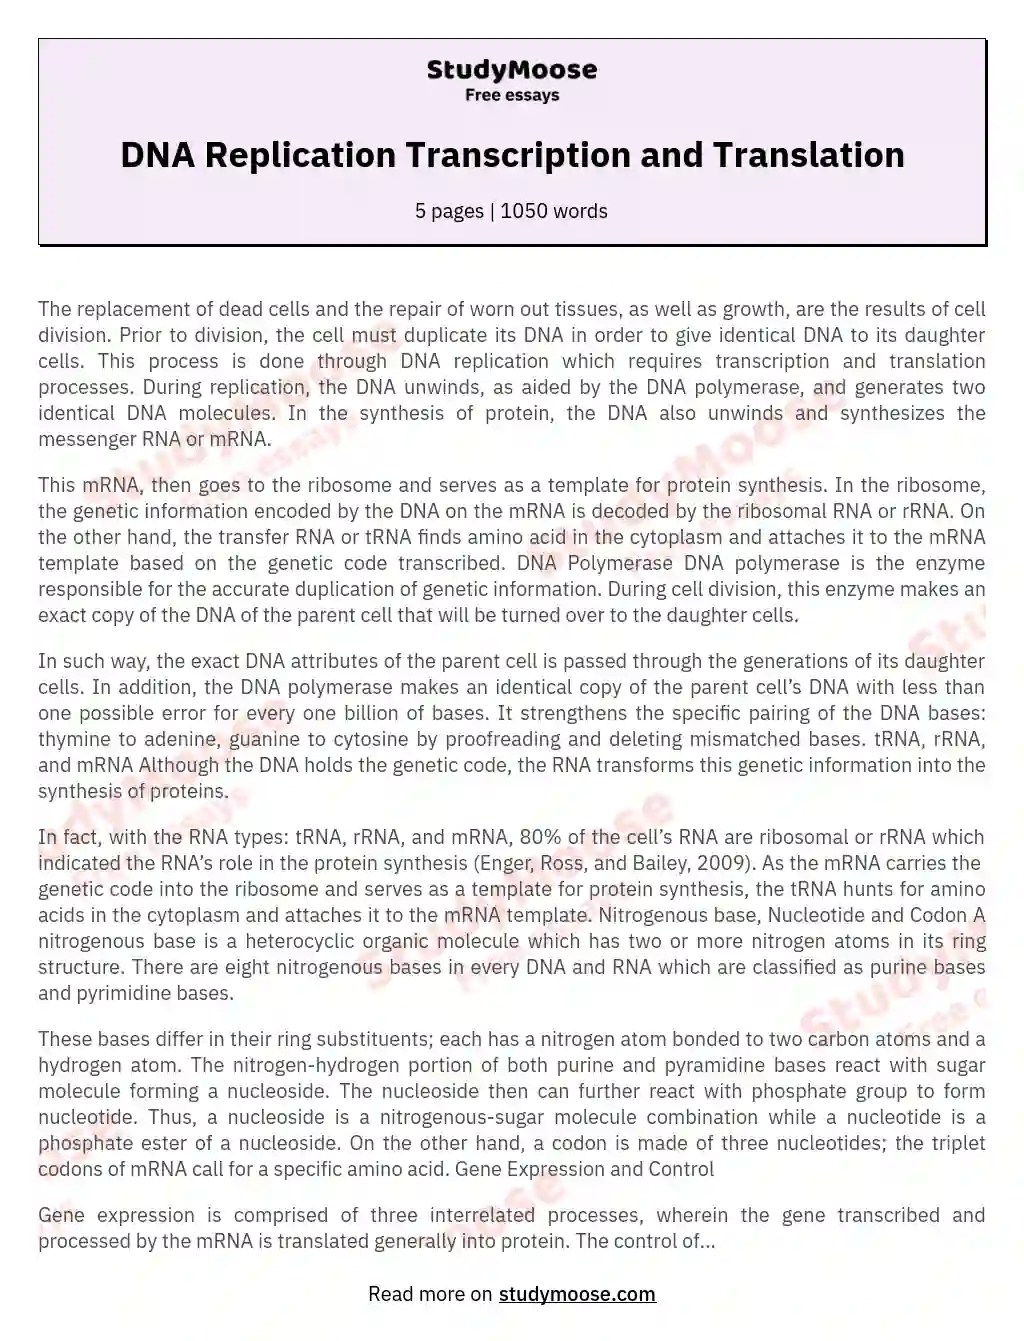 dna replication essay conclusion